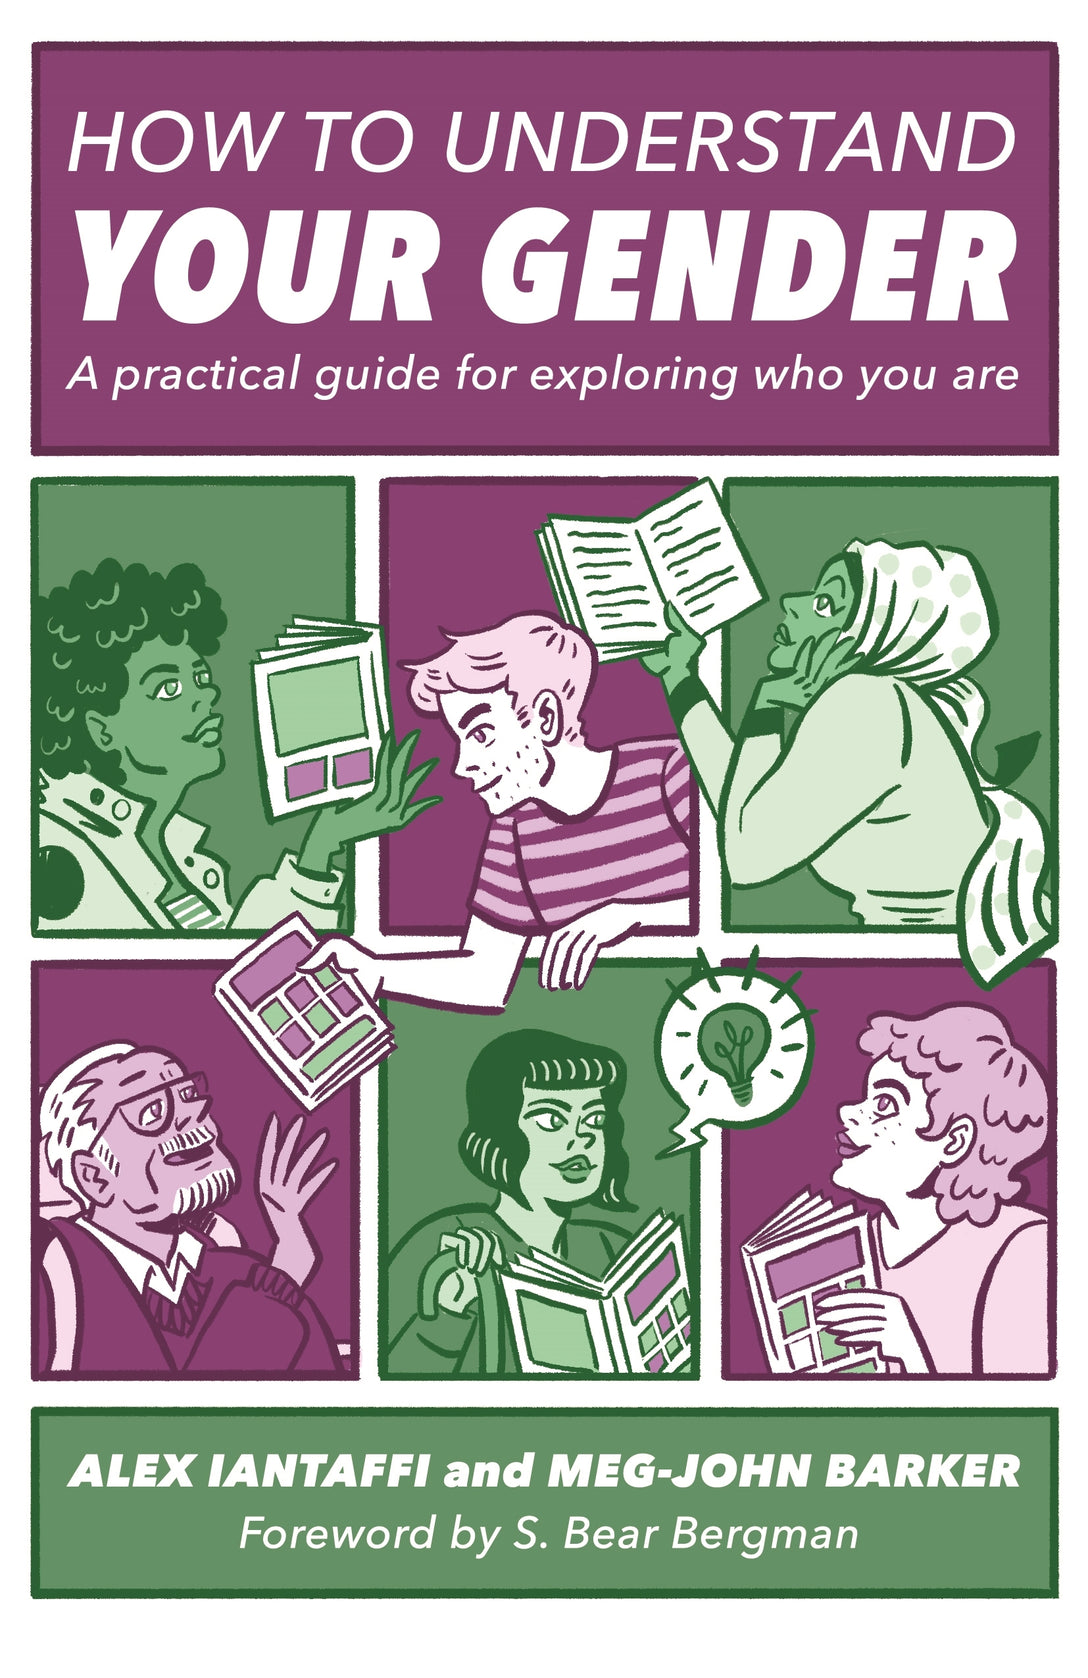 How to Understand Your Gender by Meg-John Barker, Alex Iantaffi